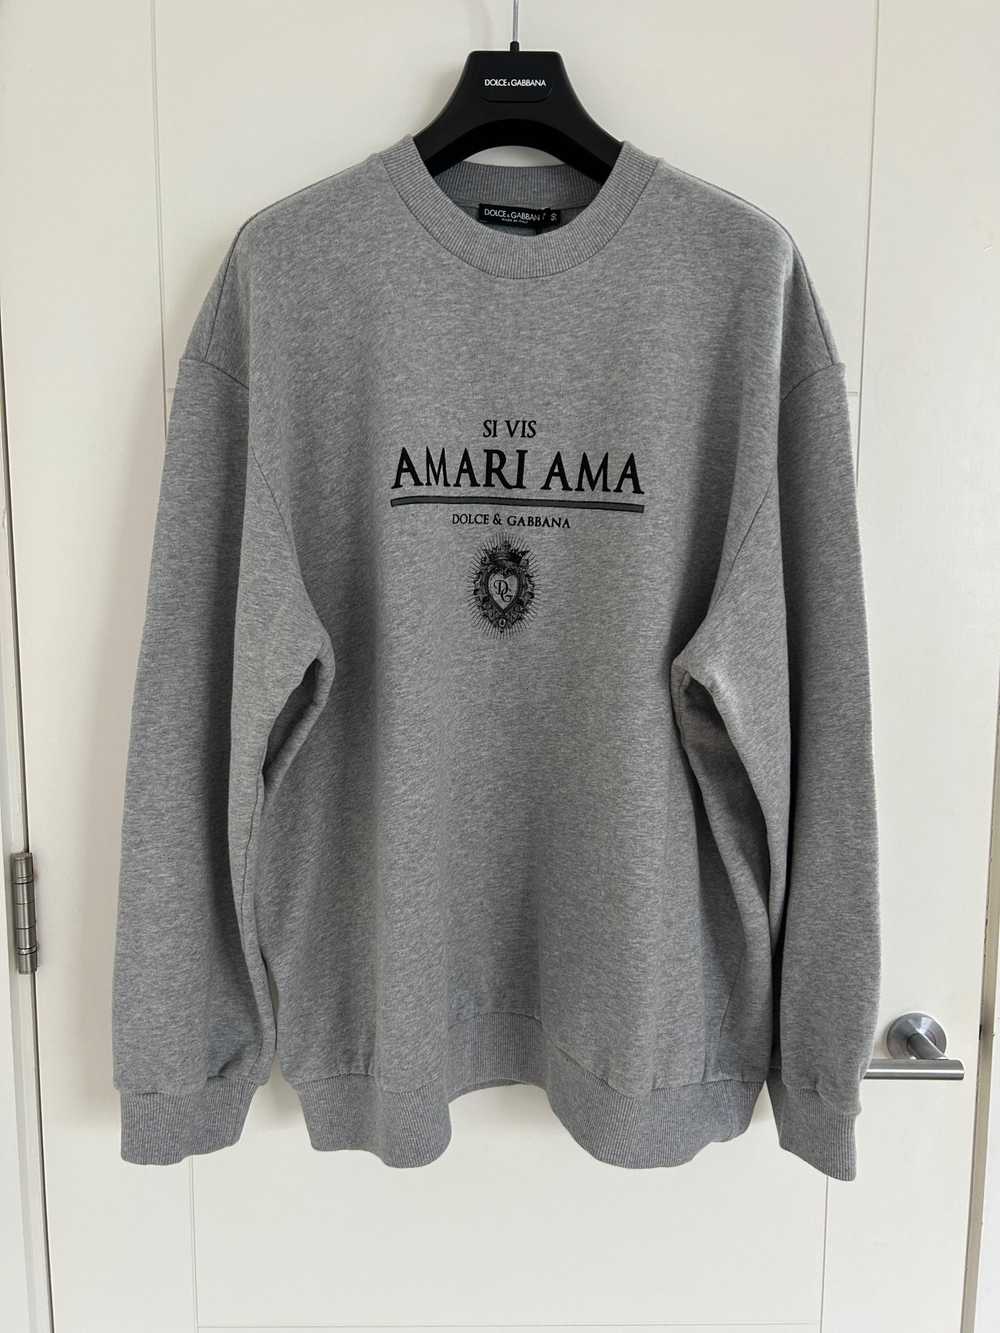 Dolce & Gabbana Amari Ama Cotton Jersey Sweatshirt - image 3